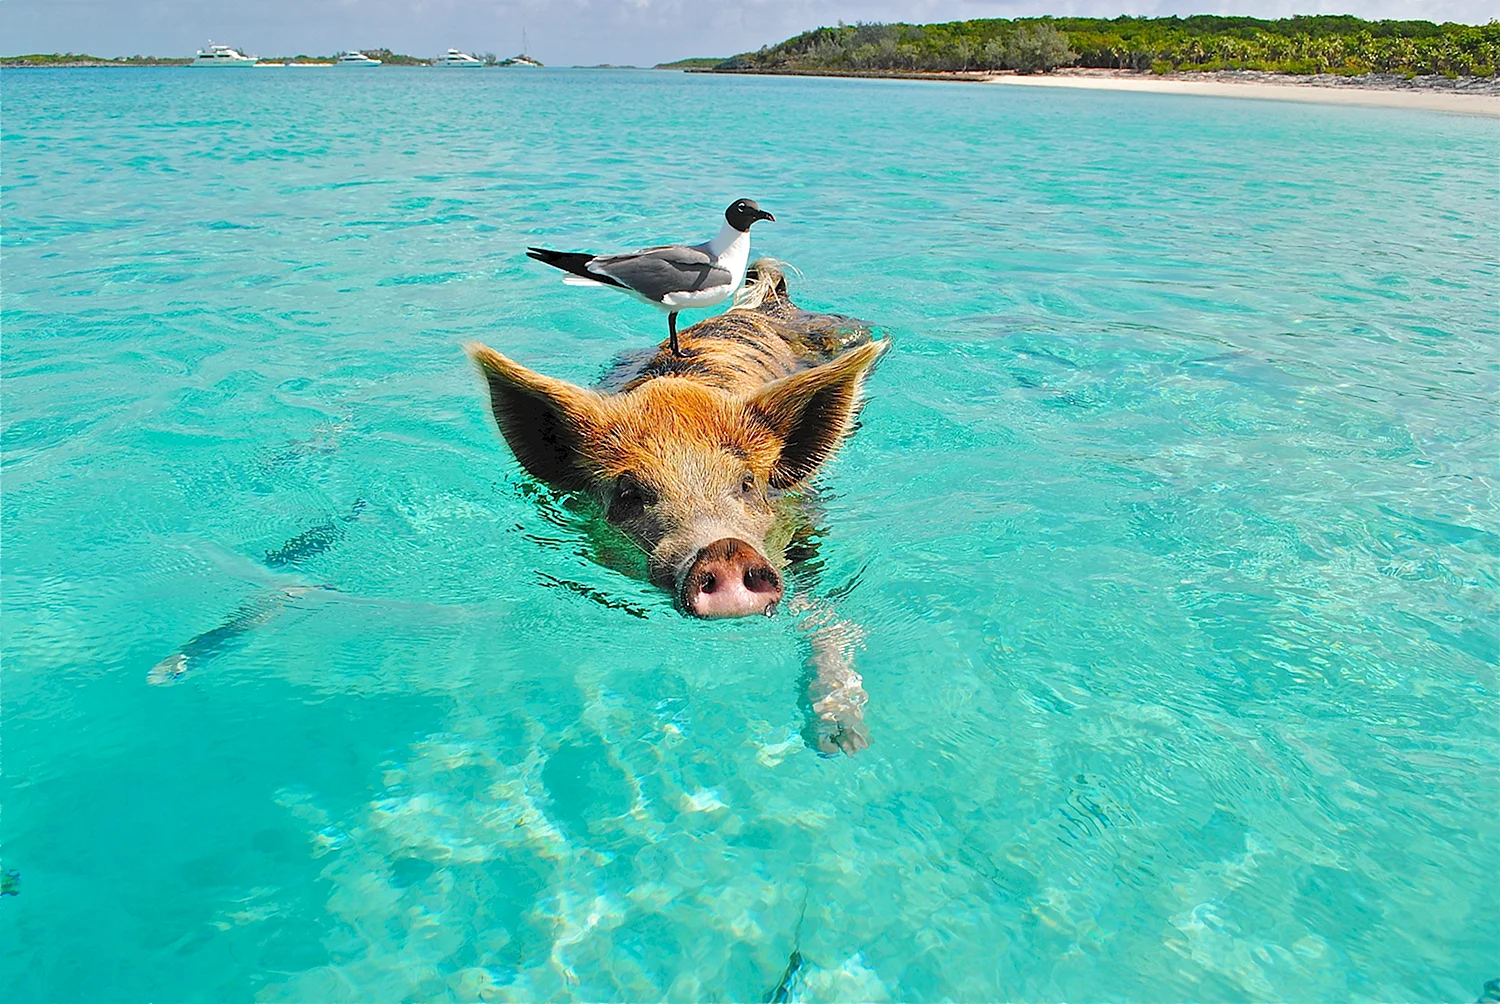 Плавающие хрюшки на Багамских островах